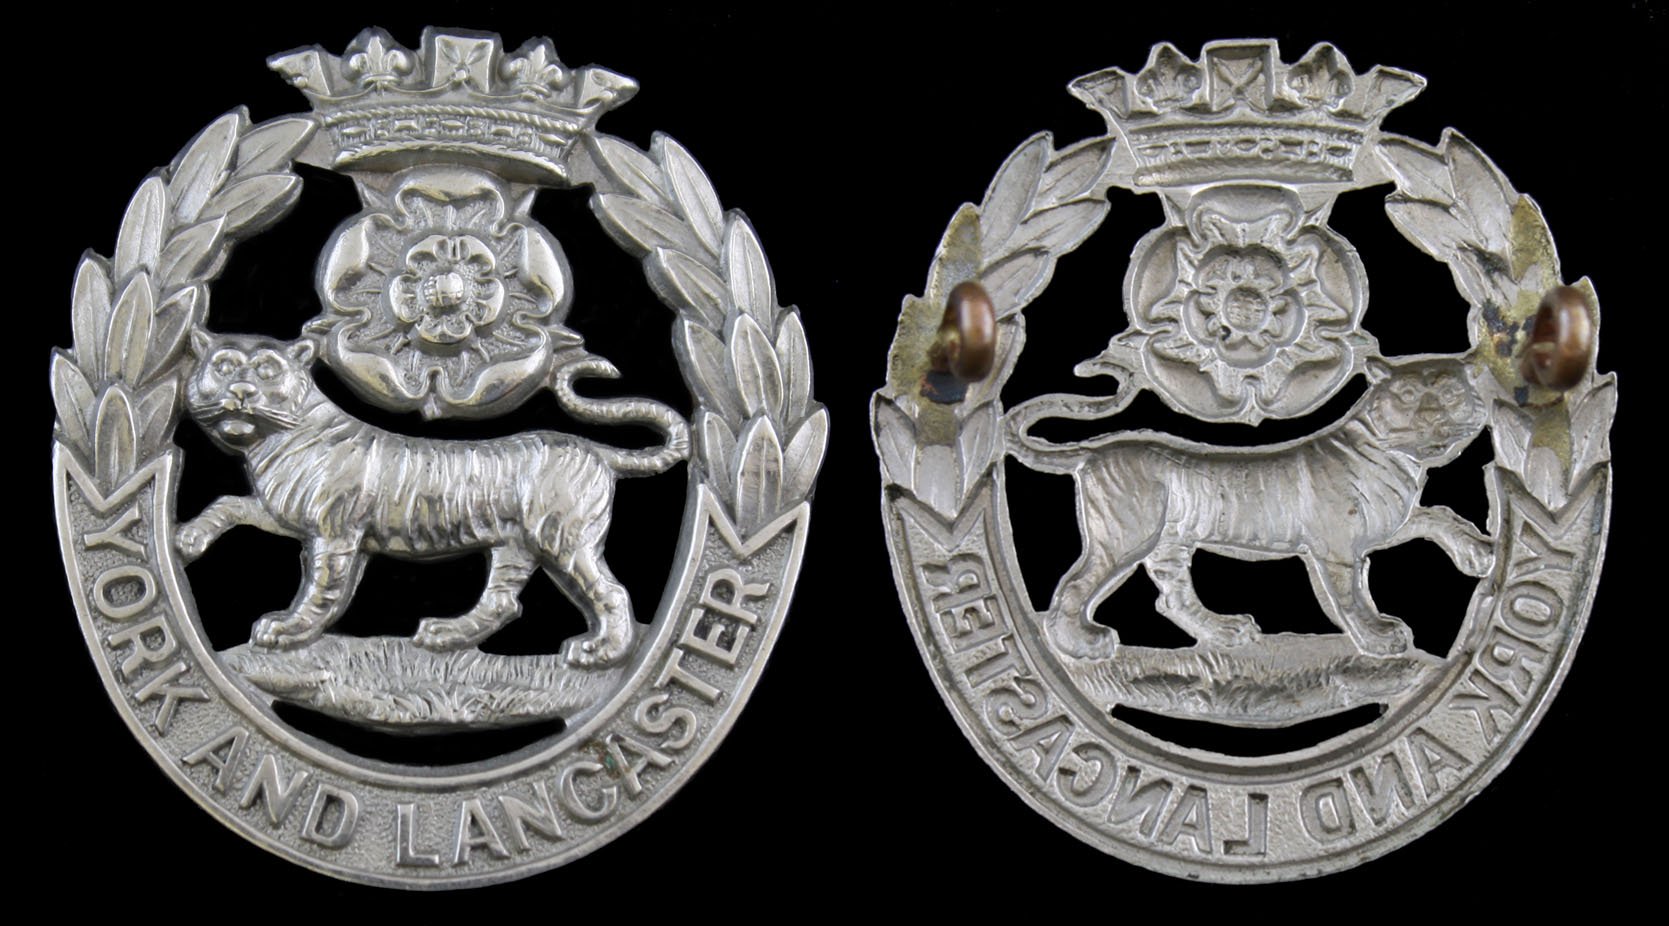 2nd Volunteer Battalion NCO’s Badge 1897 to 1908